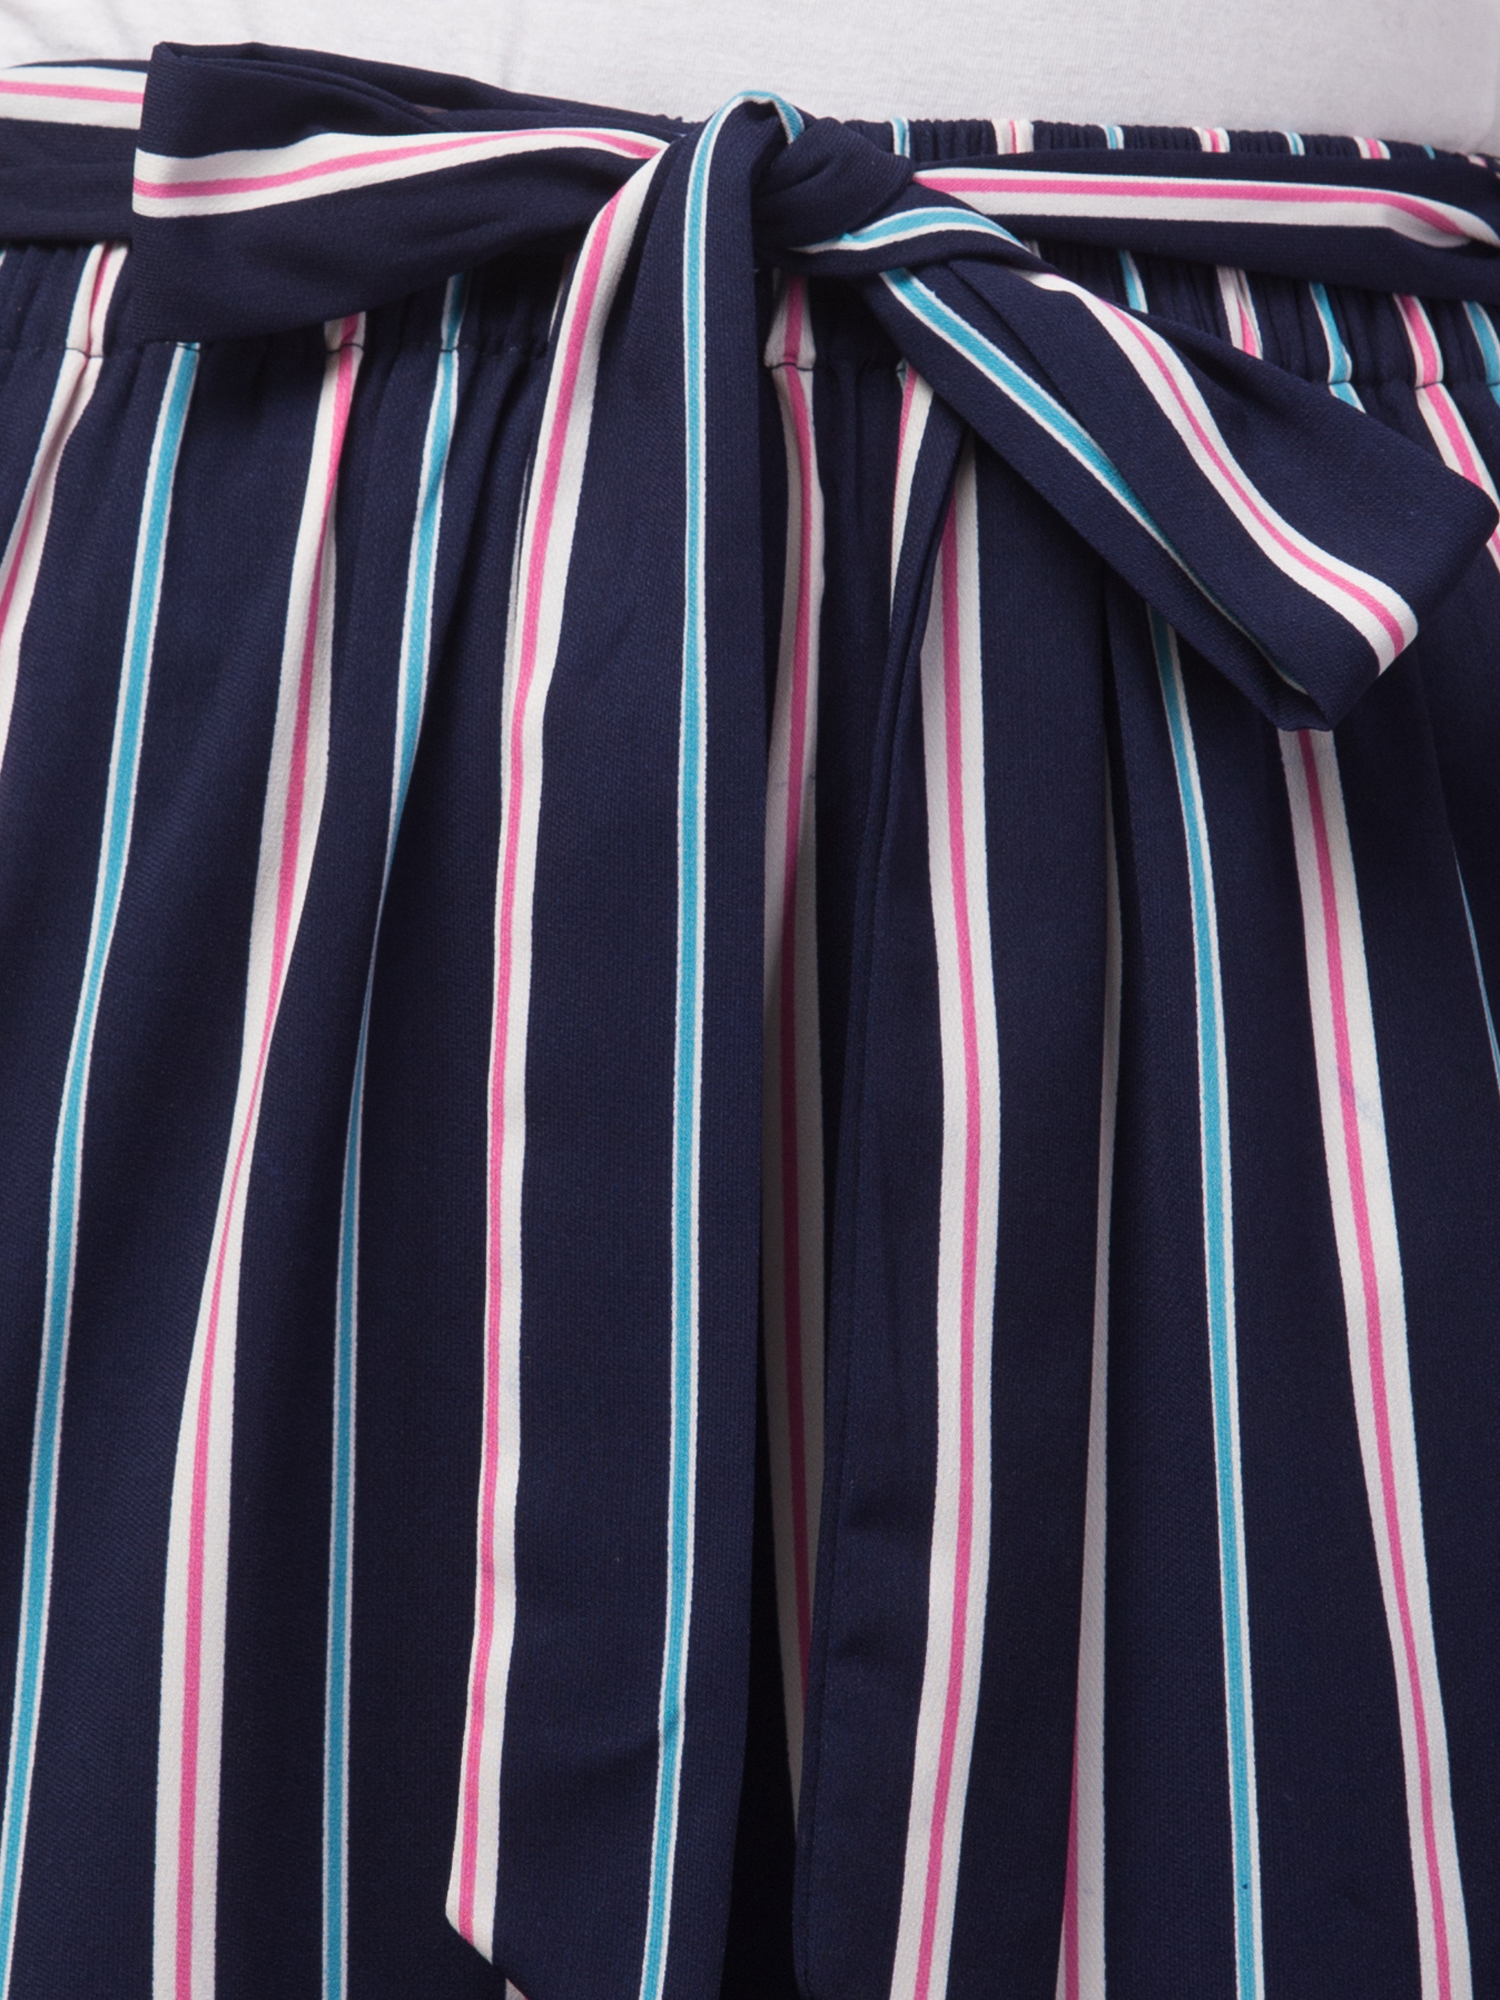 Multi-color striped high-rise trouser | idara.com | India's leading ...